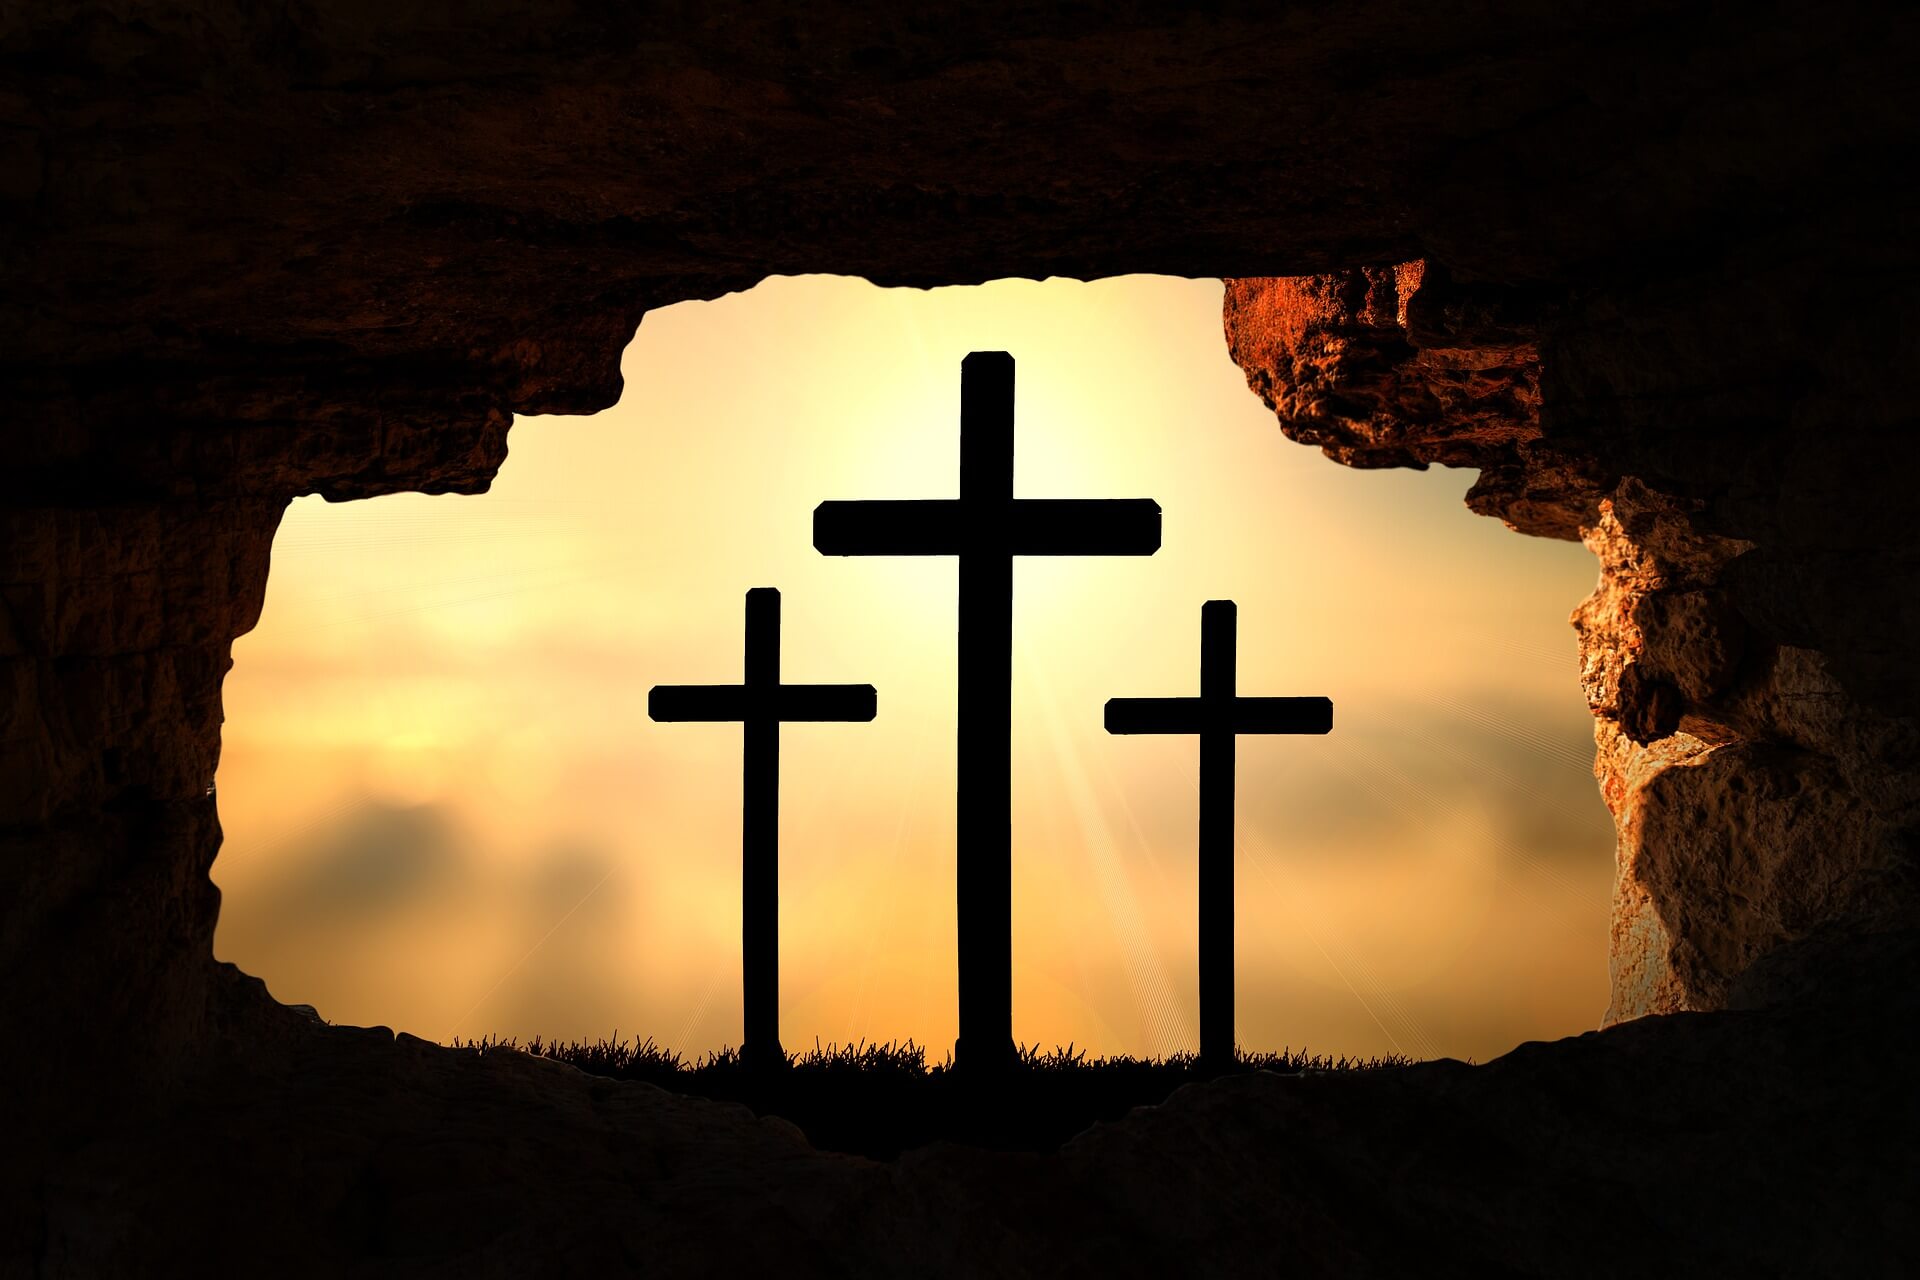 Easter – Resurrection Sunday